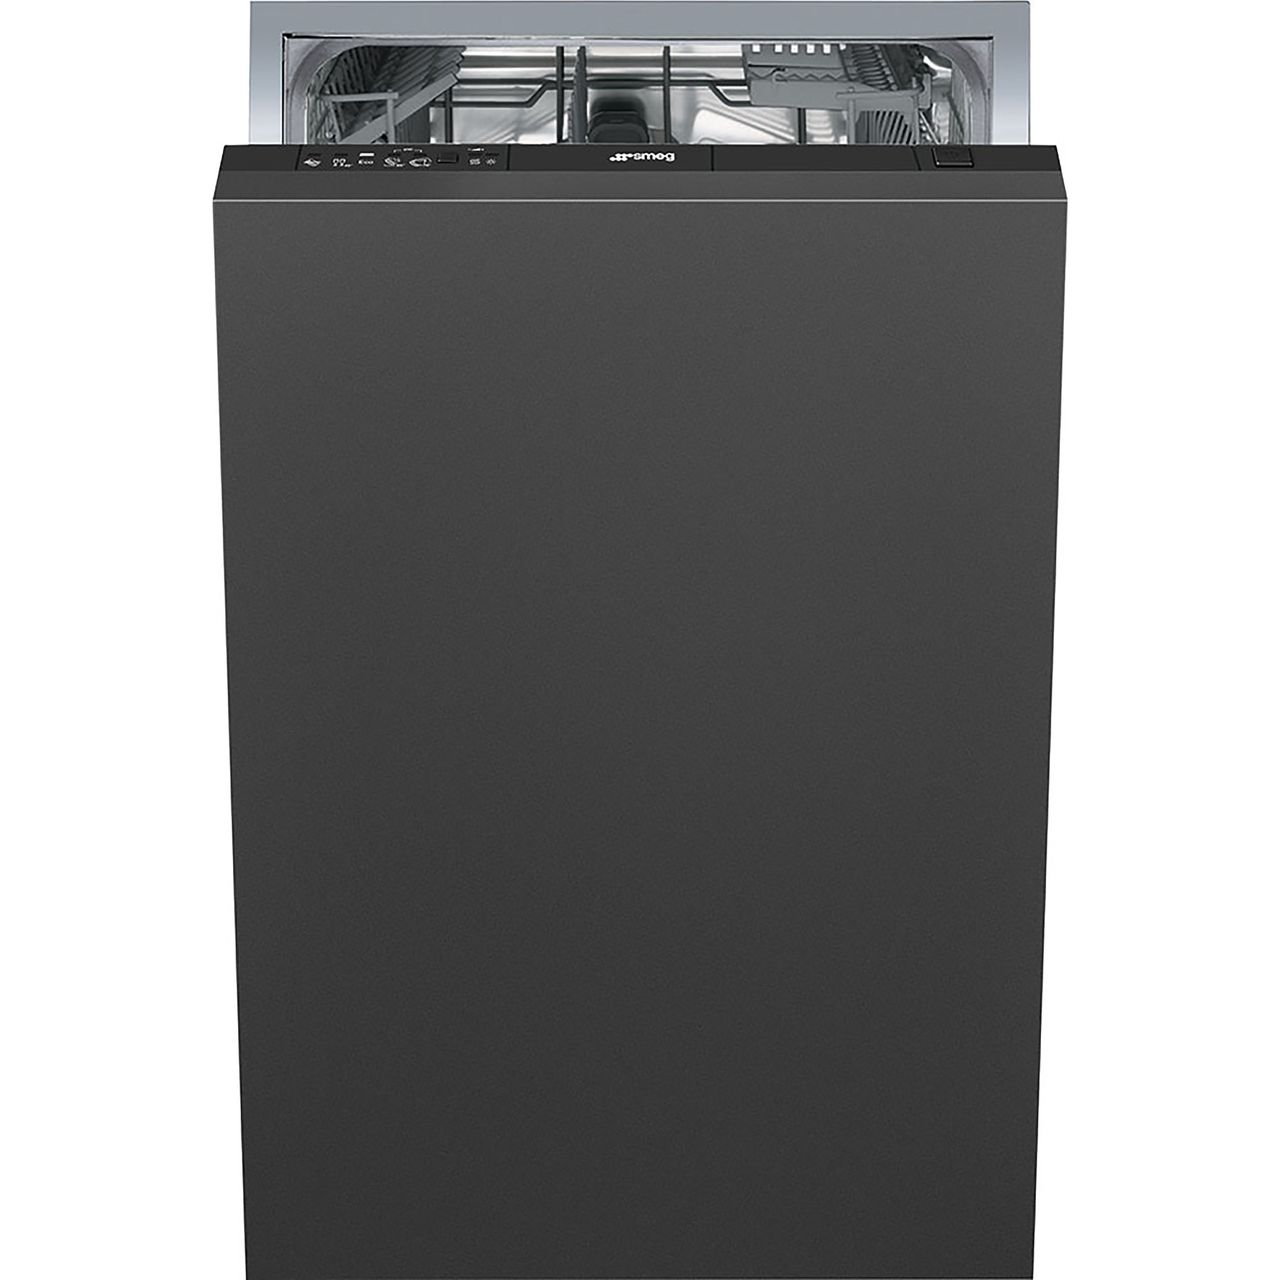 Smeg DIC410 Fully Integrated Slimline Dishwasher Review